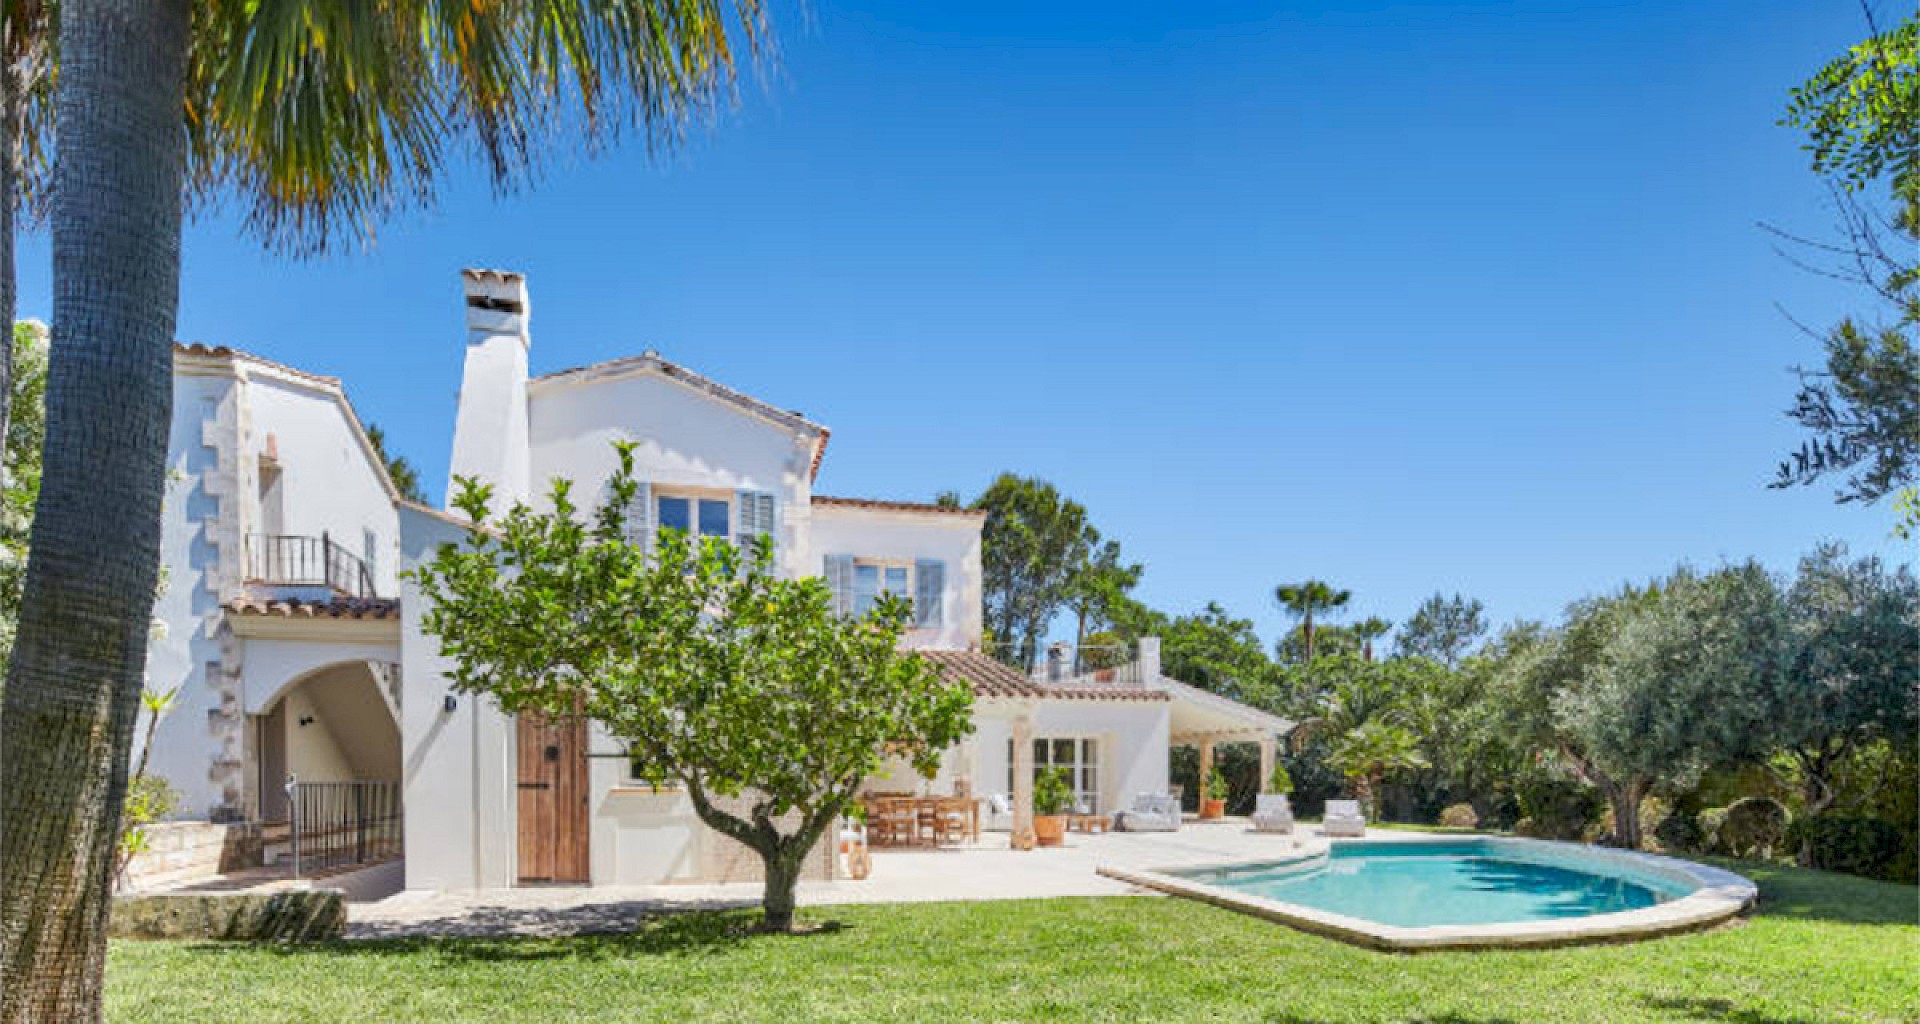 KROHN & LUEDEMANN Mediterranean Family Villa completely renovated in best location in Santa Ponsa for sale Familienvilla